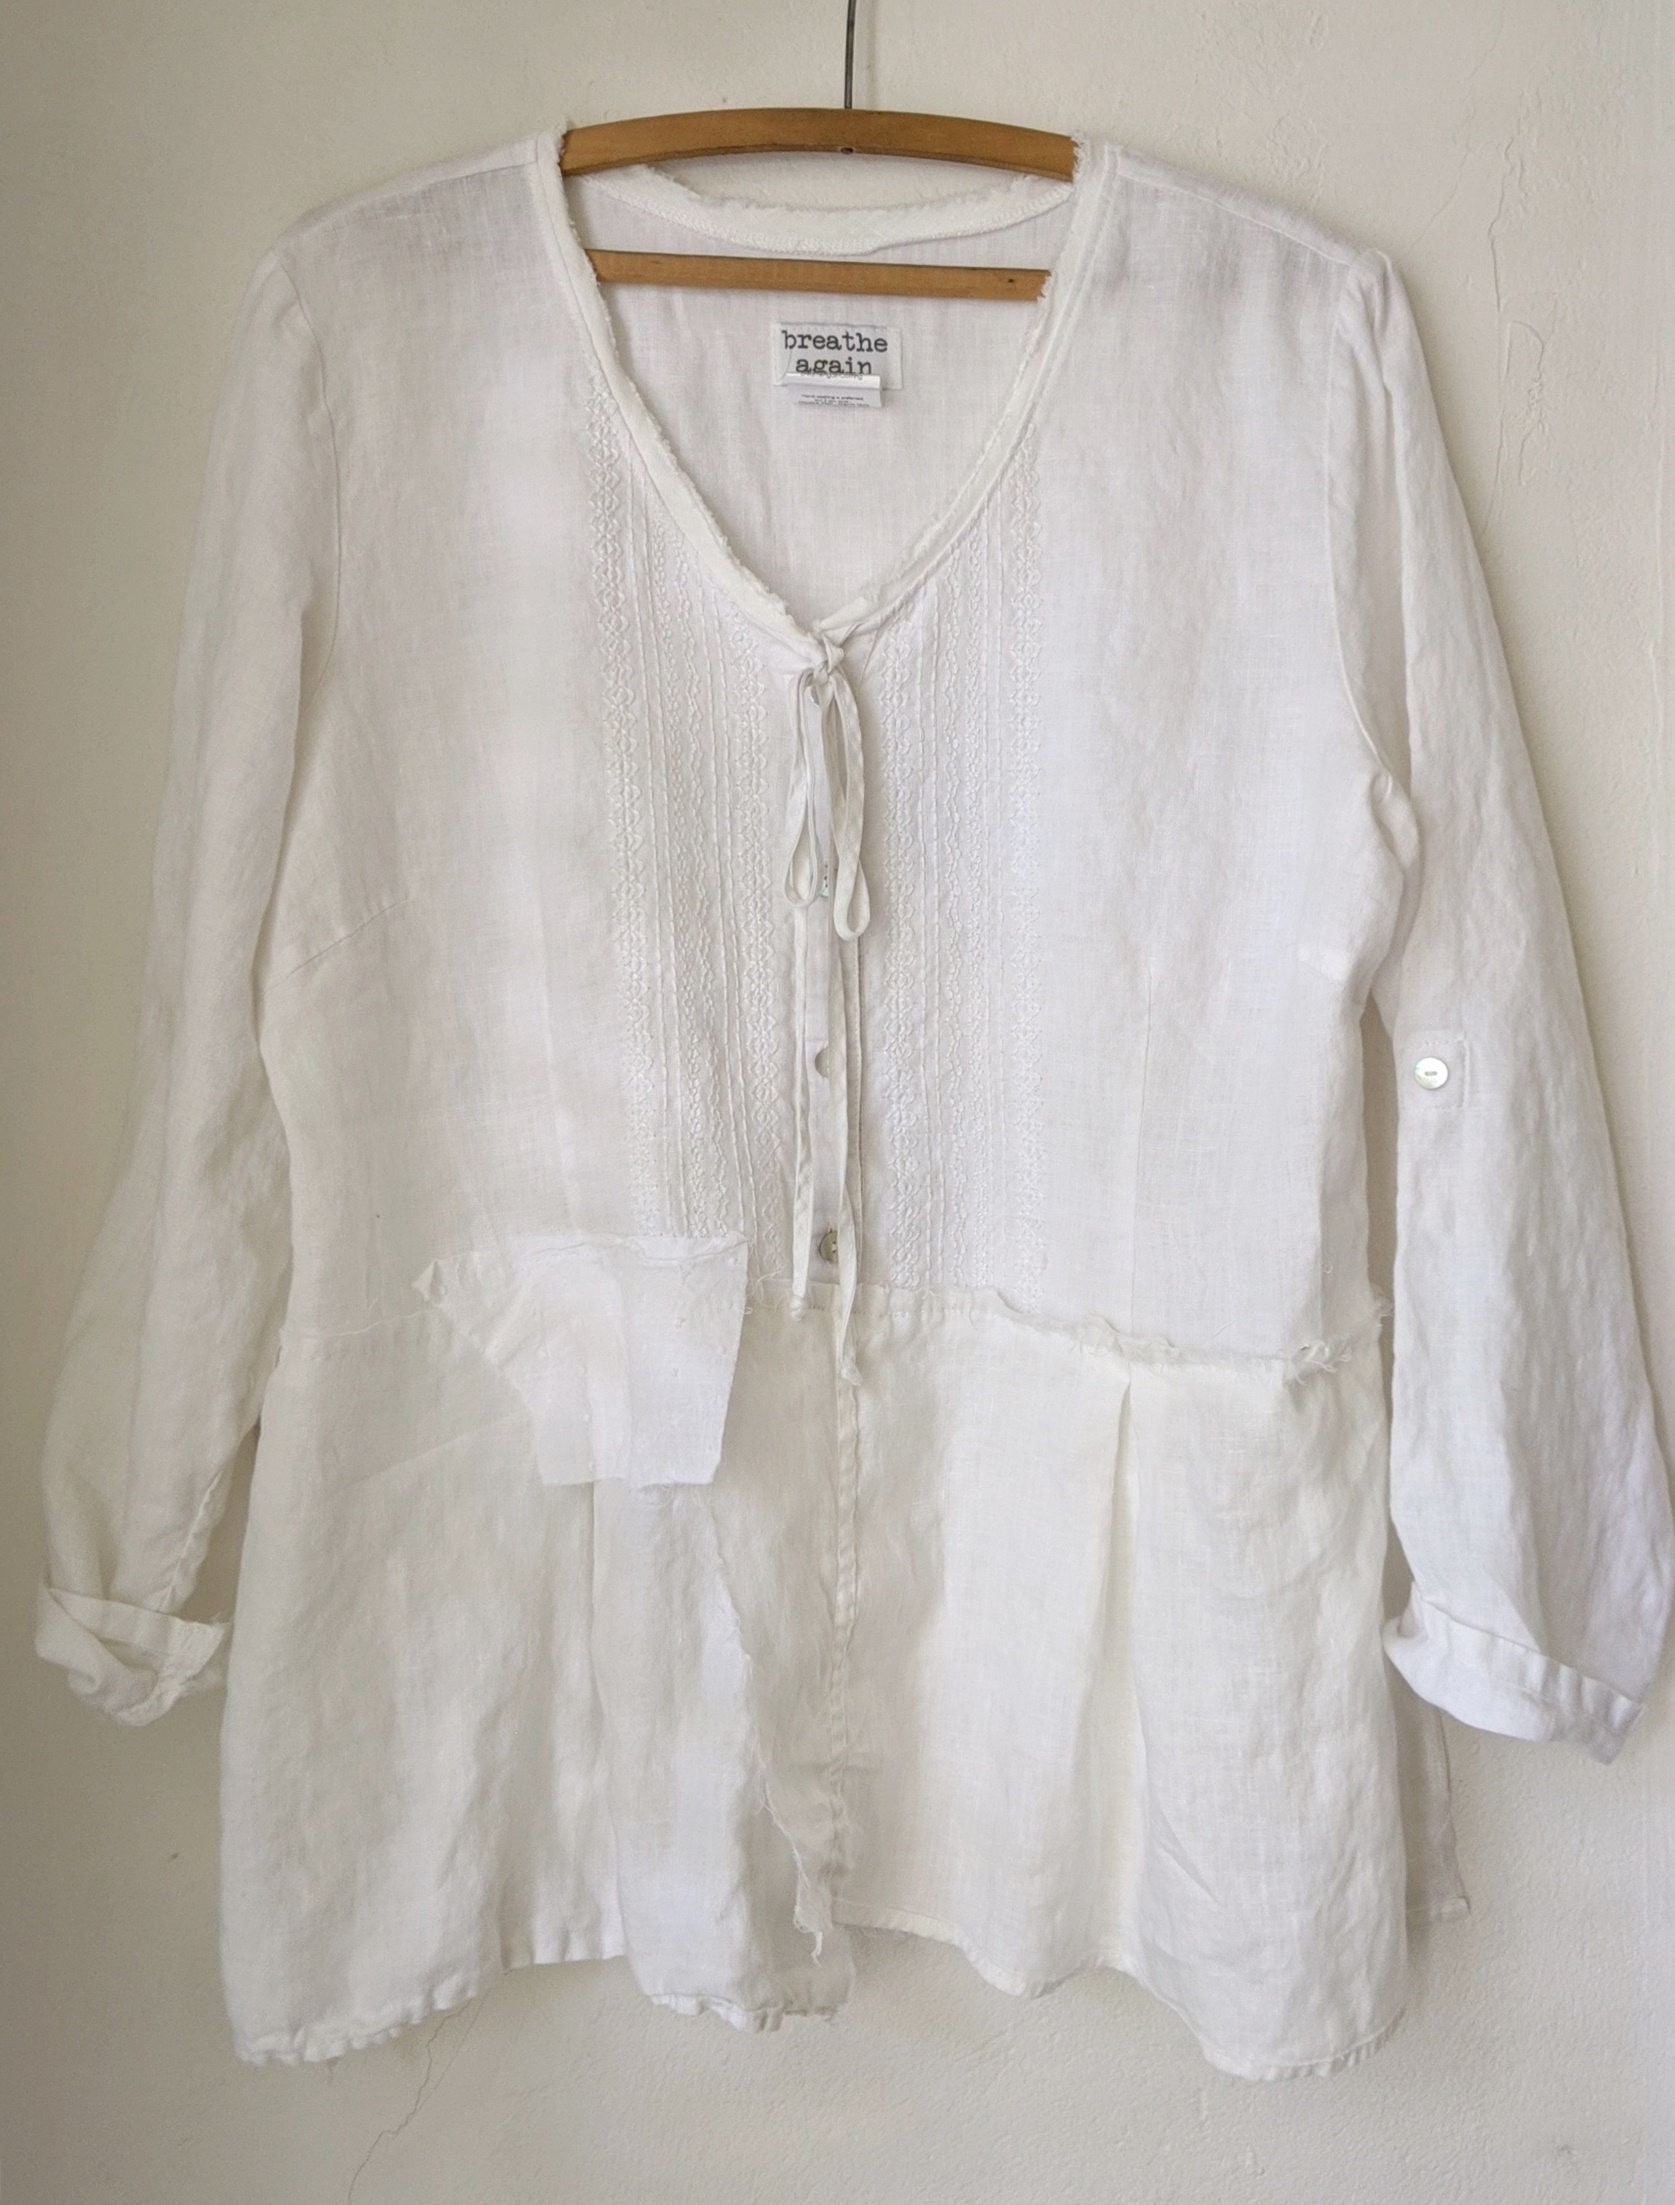 NEW White Breathe-again Artisan Shirt / Handmade by - Etsy